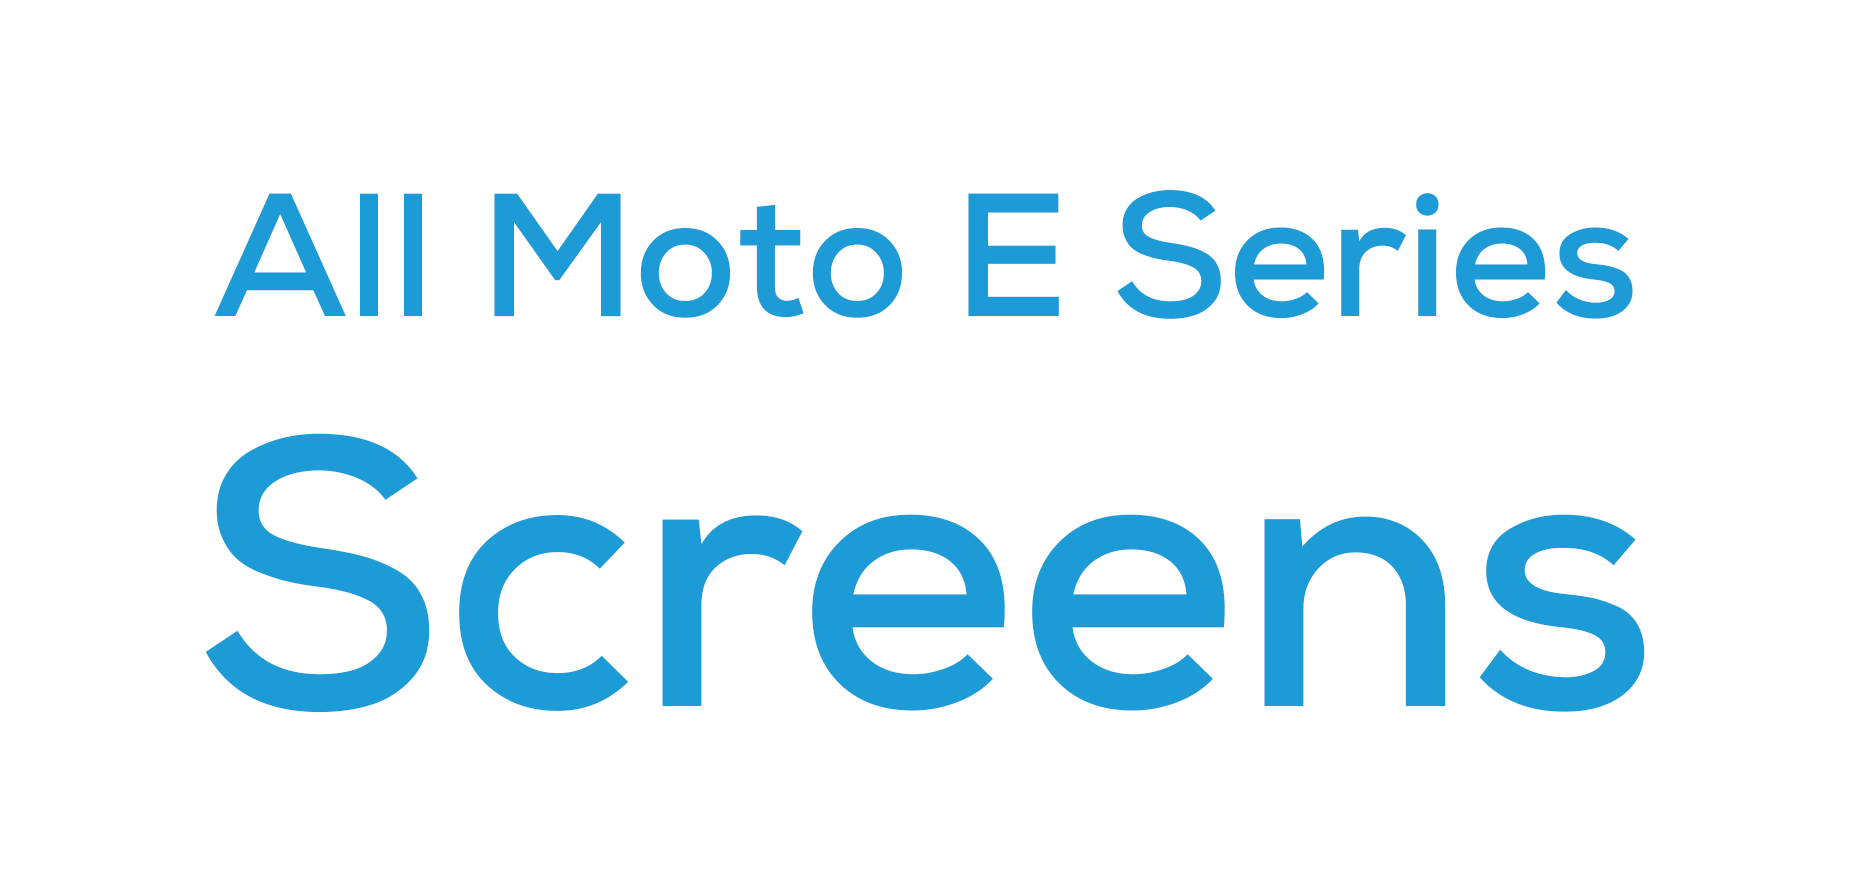 All Moto E Series Screens